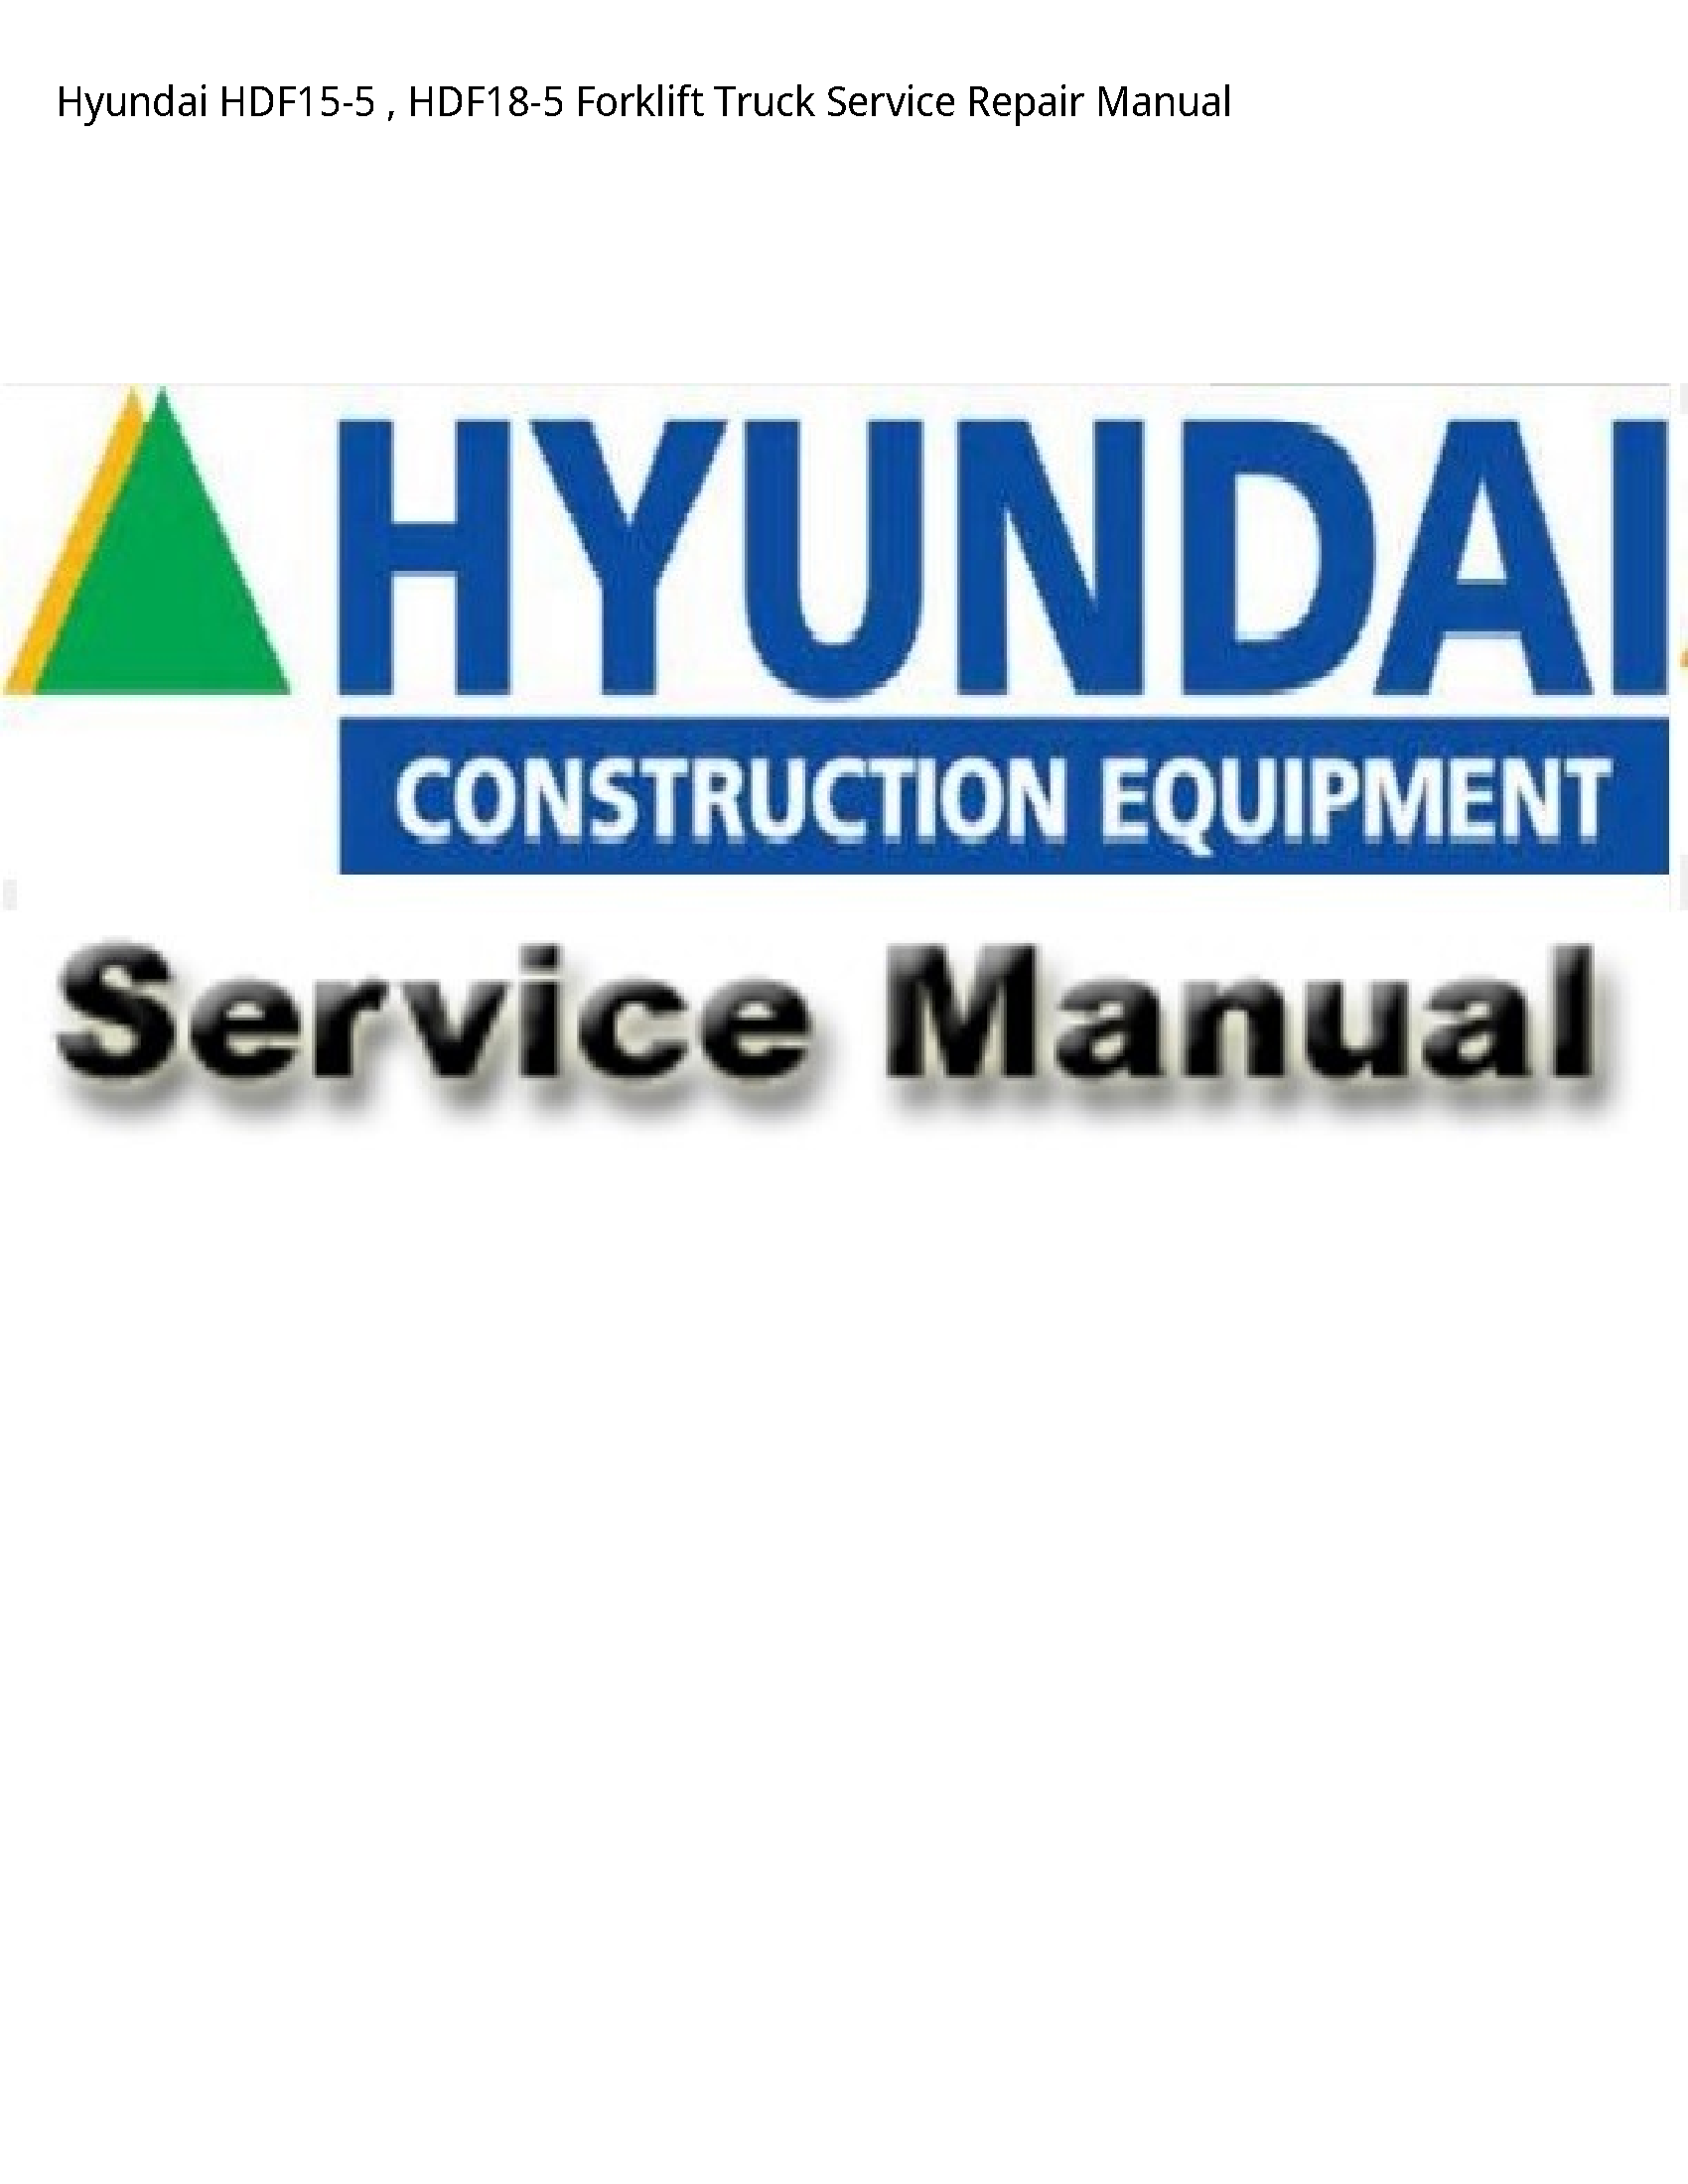 Hyundai HDF15-5 Forklift Truck manual